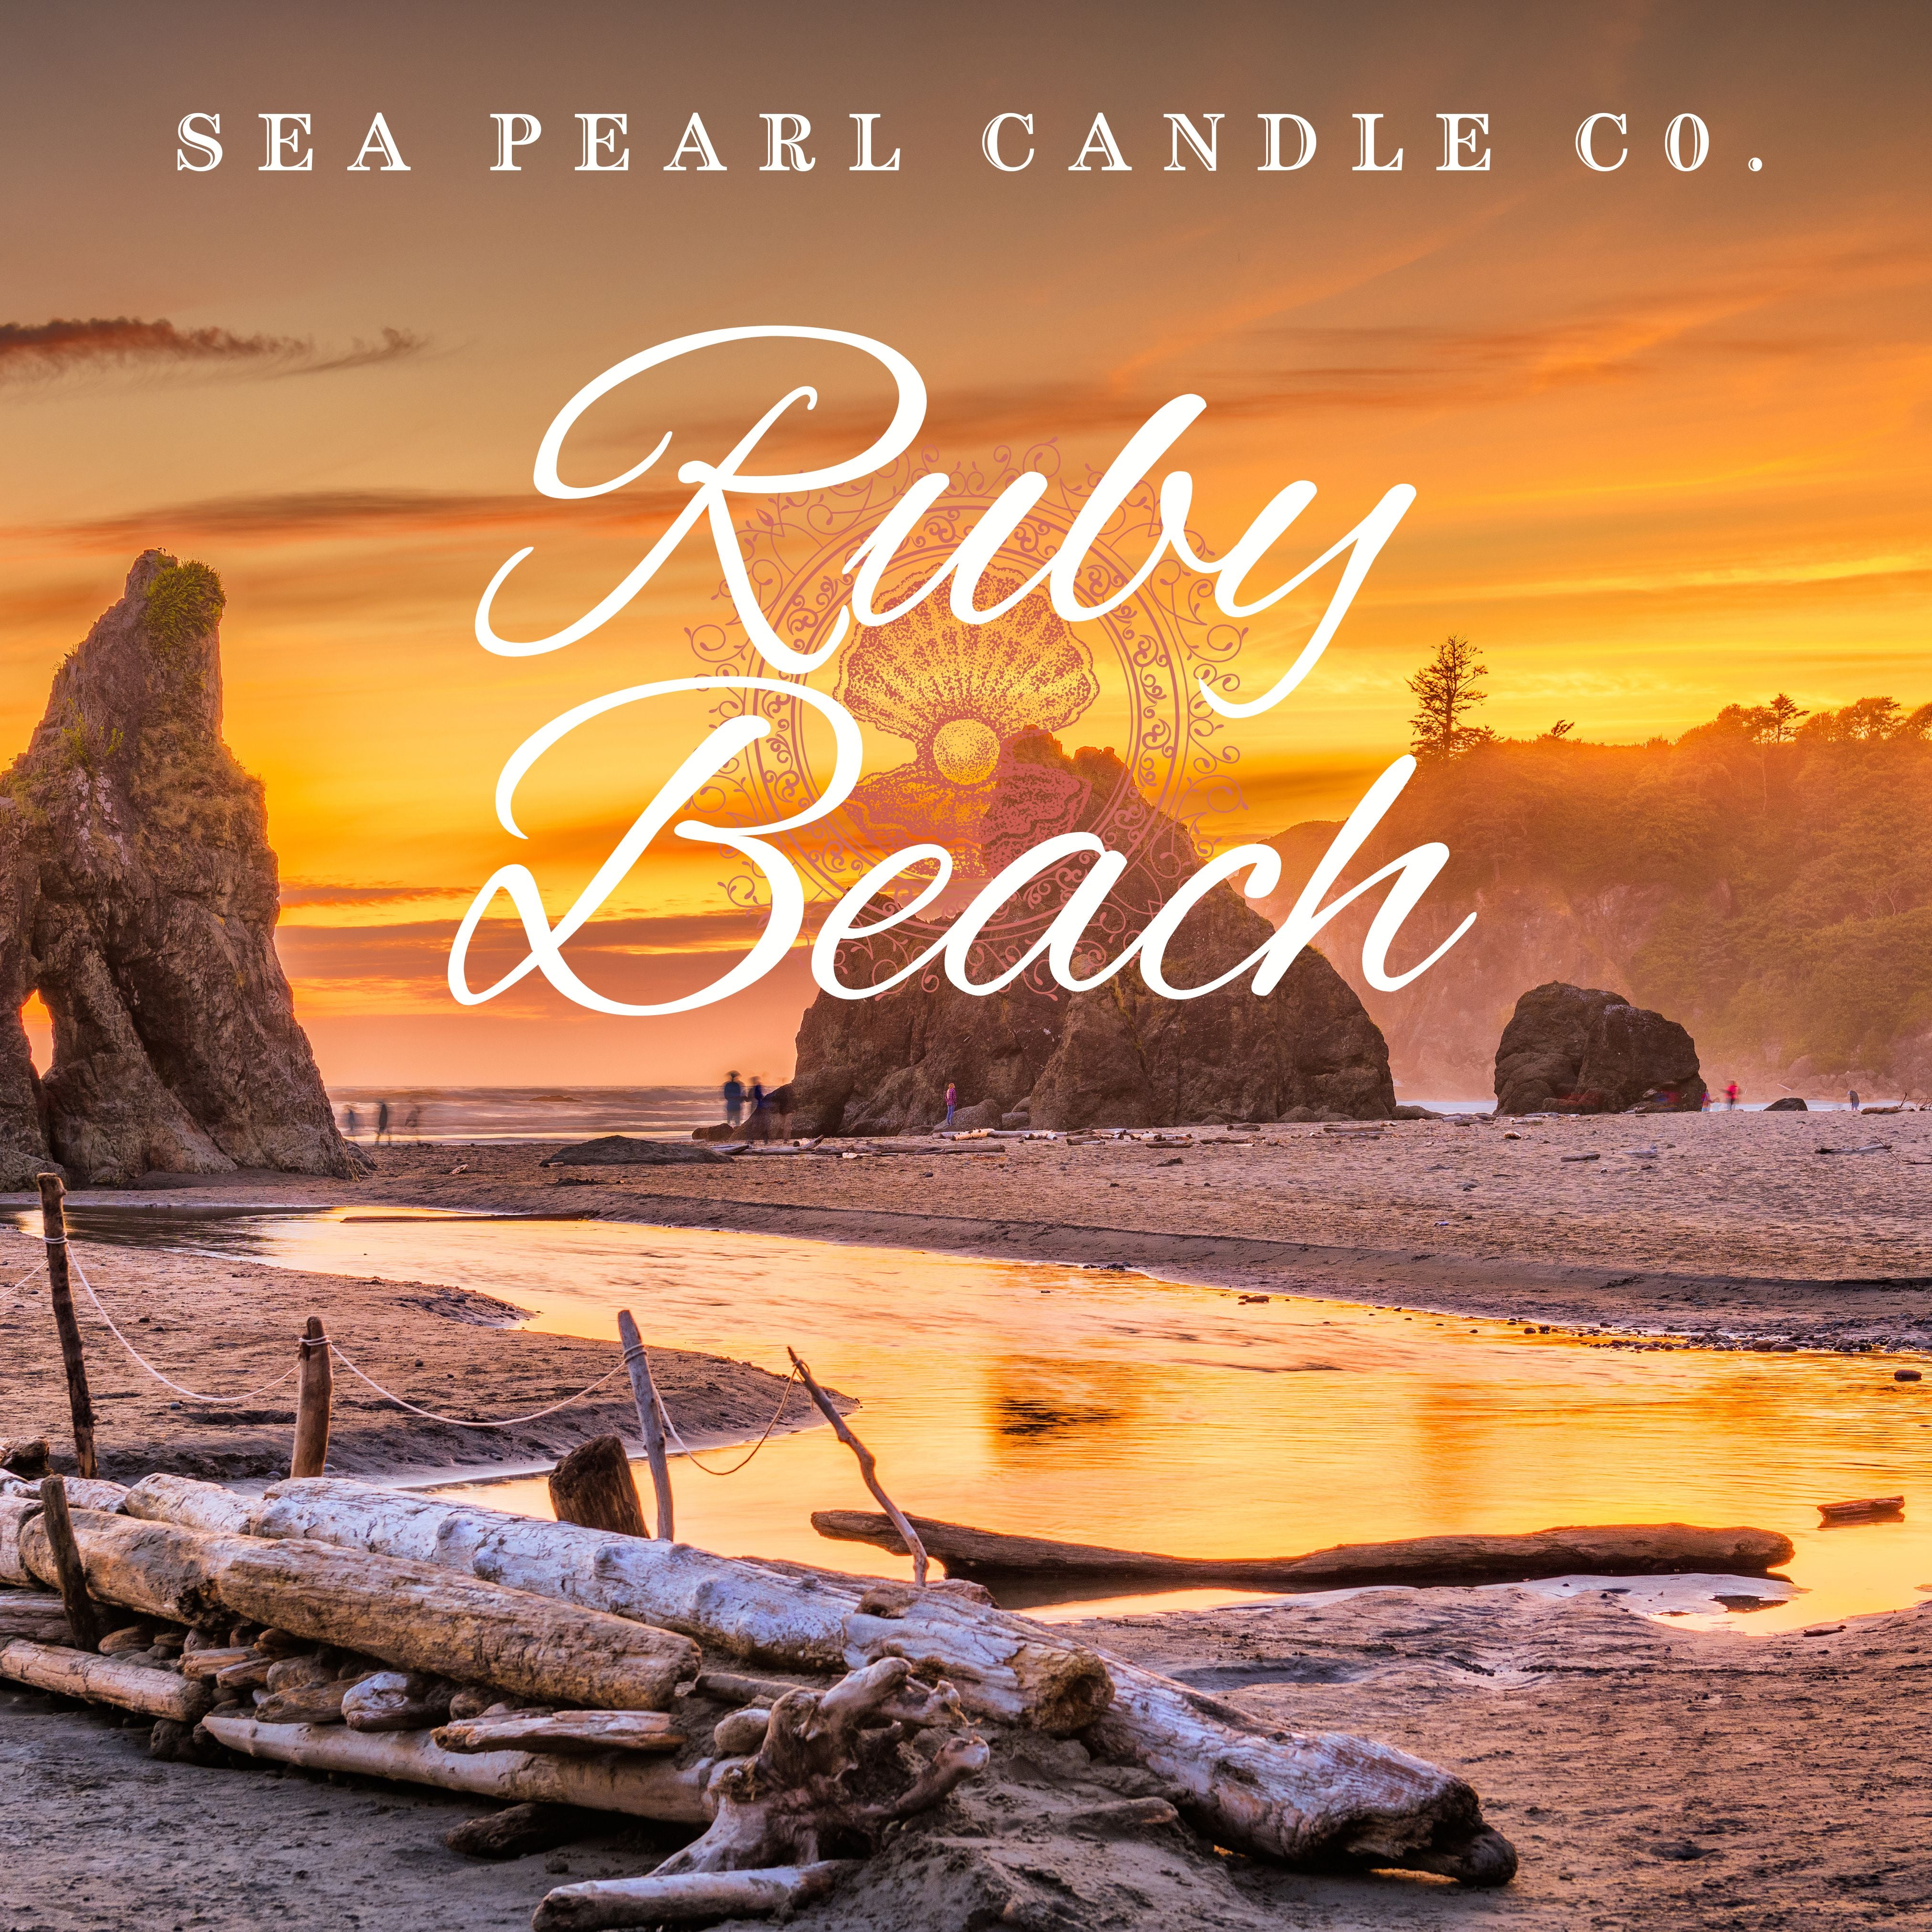 Ruby Beach – SeaPearlCandleCo.